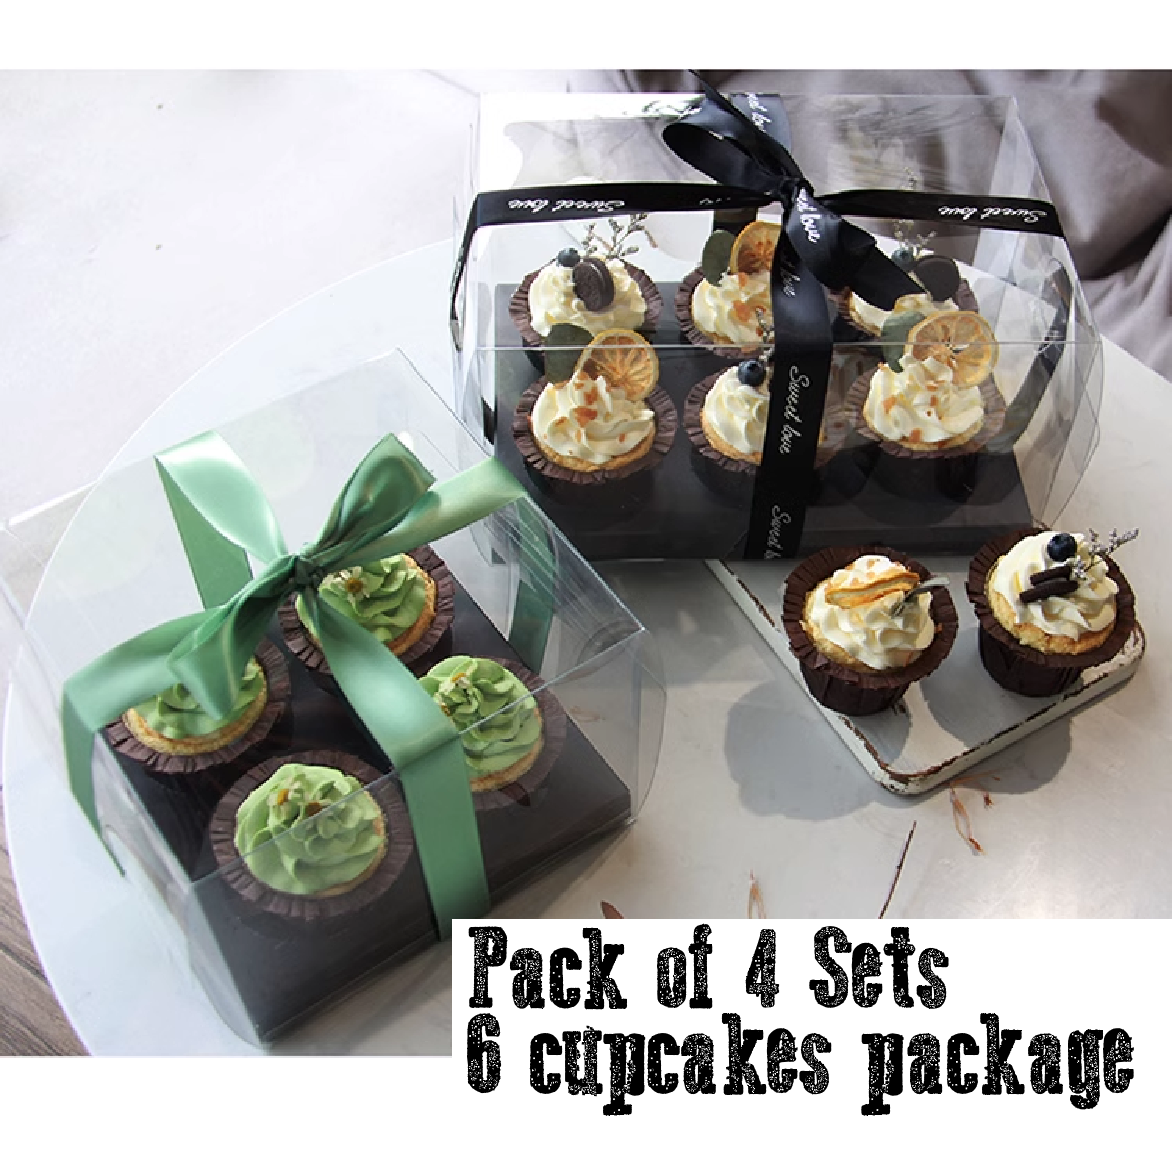 Cupcake Packaging - Transparent Cupcake Display Box - Holds 6 Cupcakes - Black Set of 4